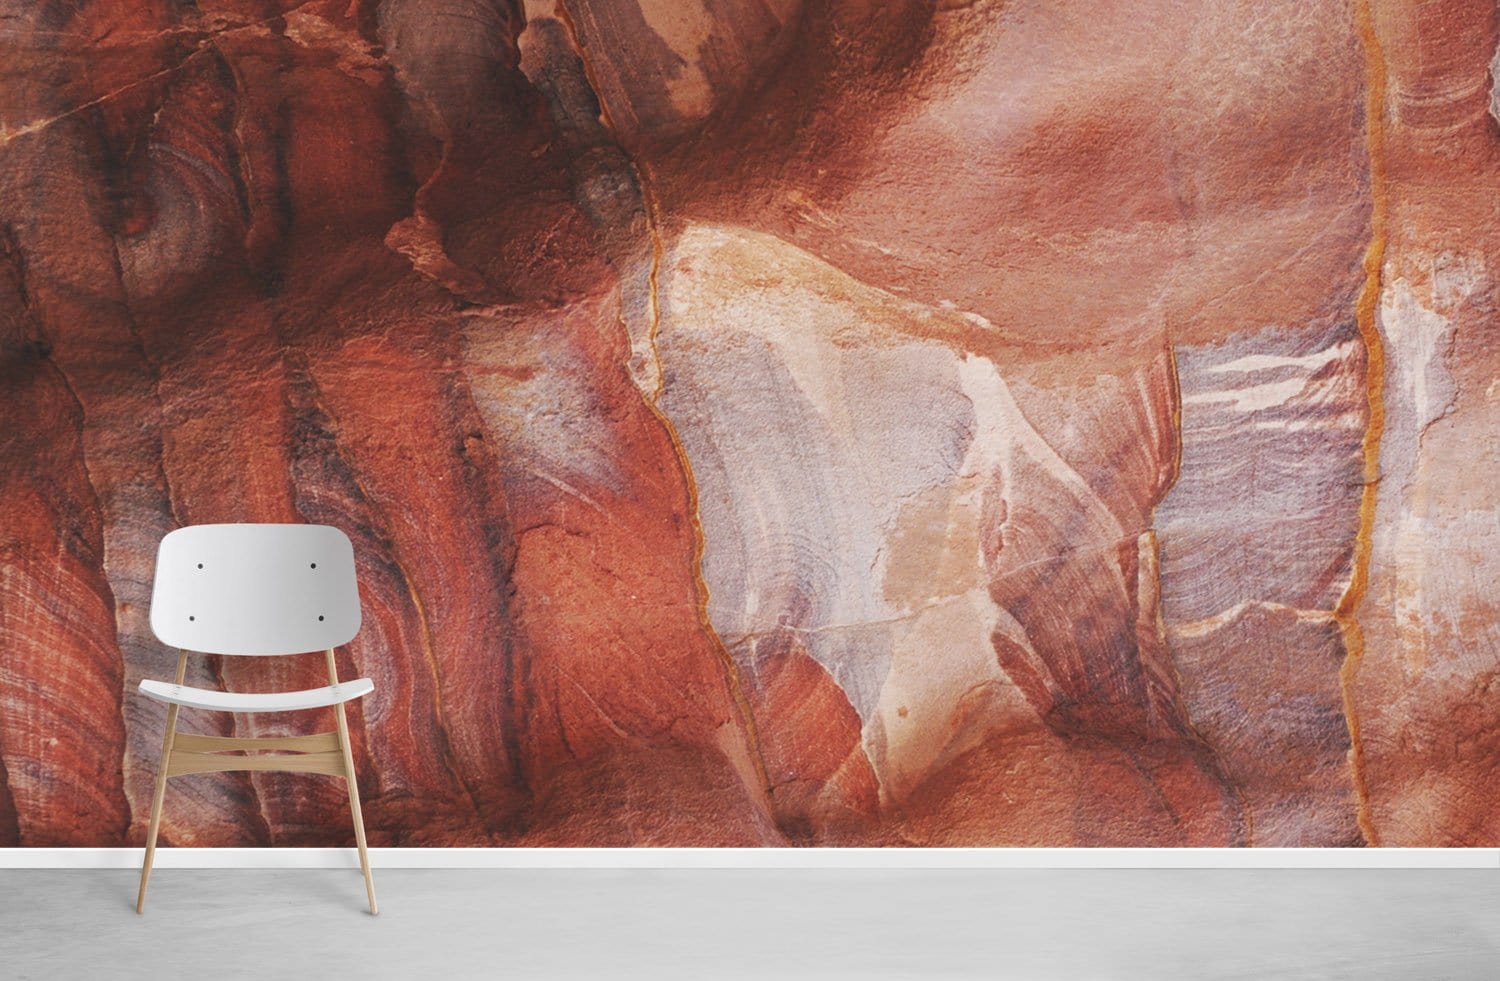 Mountain Rock Canyon Wall Mural Wallpaper for Interior Design of Your Home